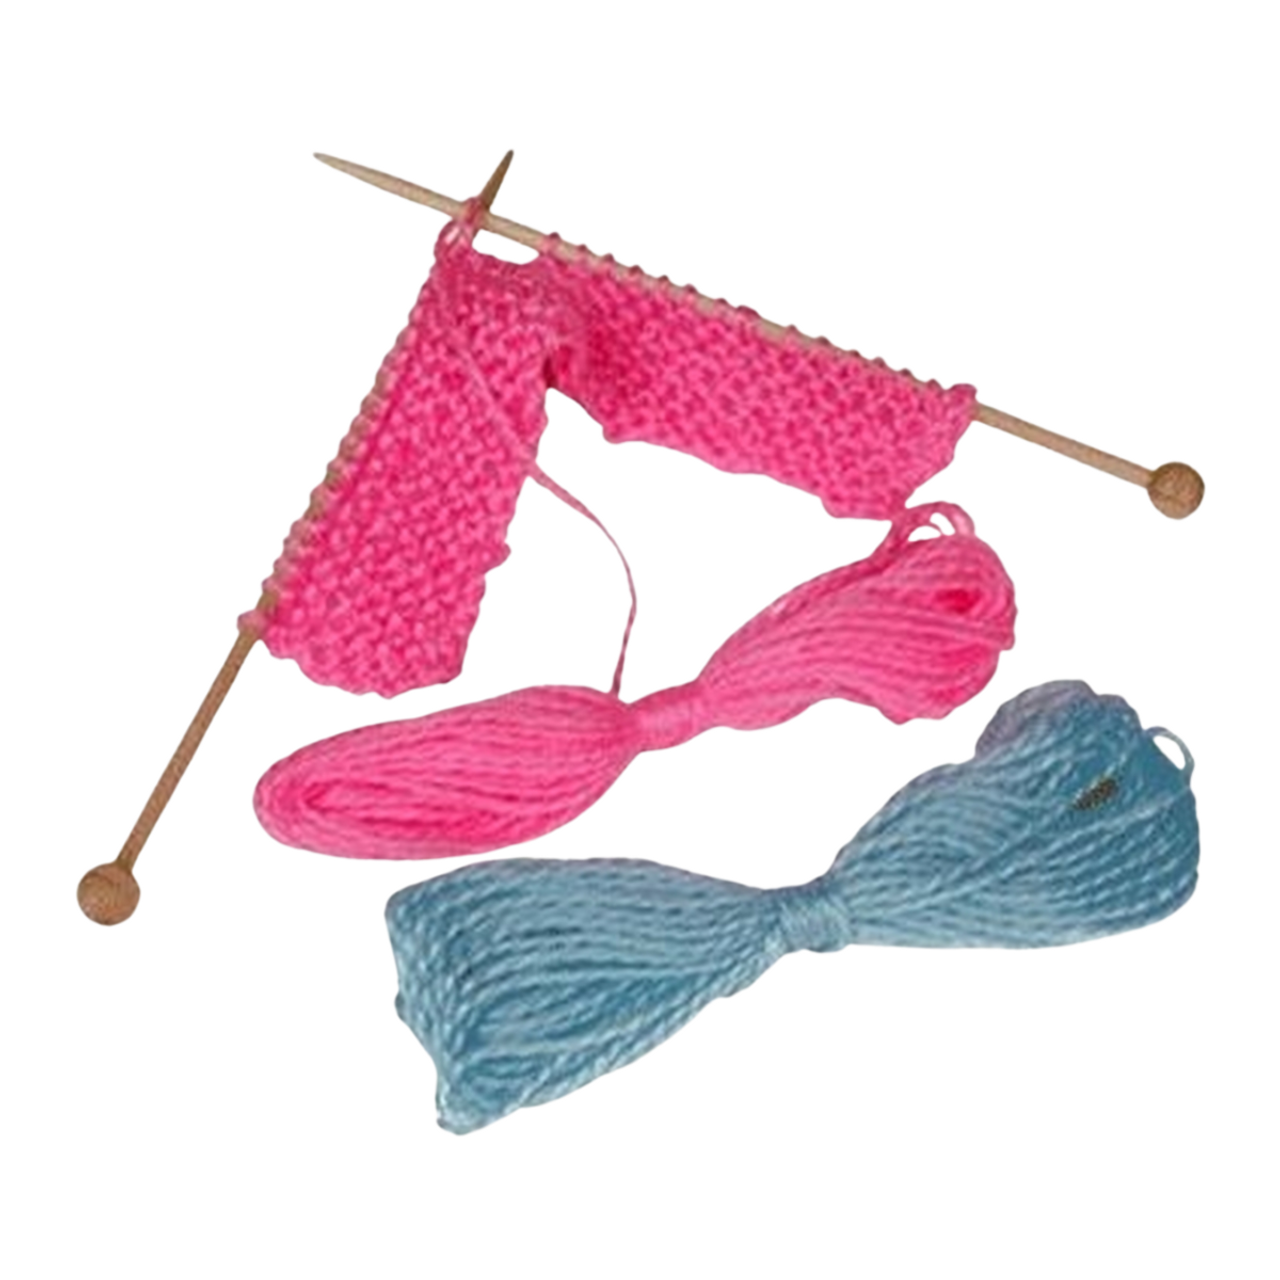 Knitting for Kids - Waldorf Toys